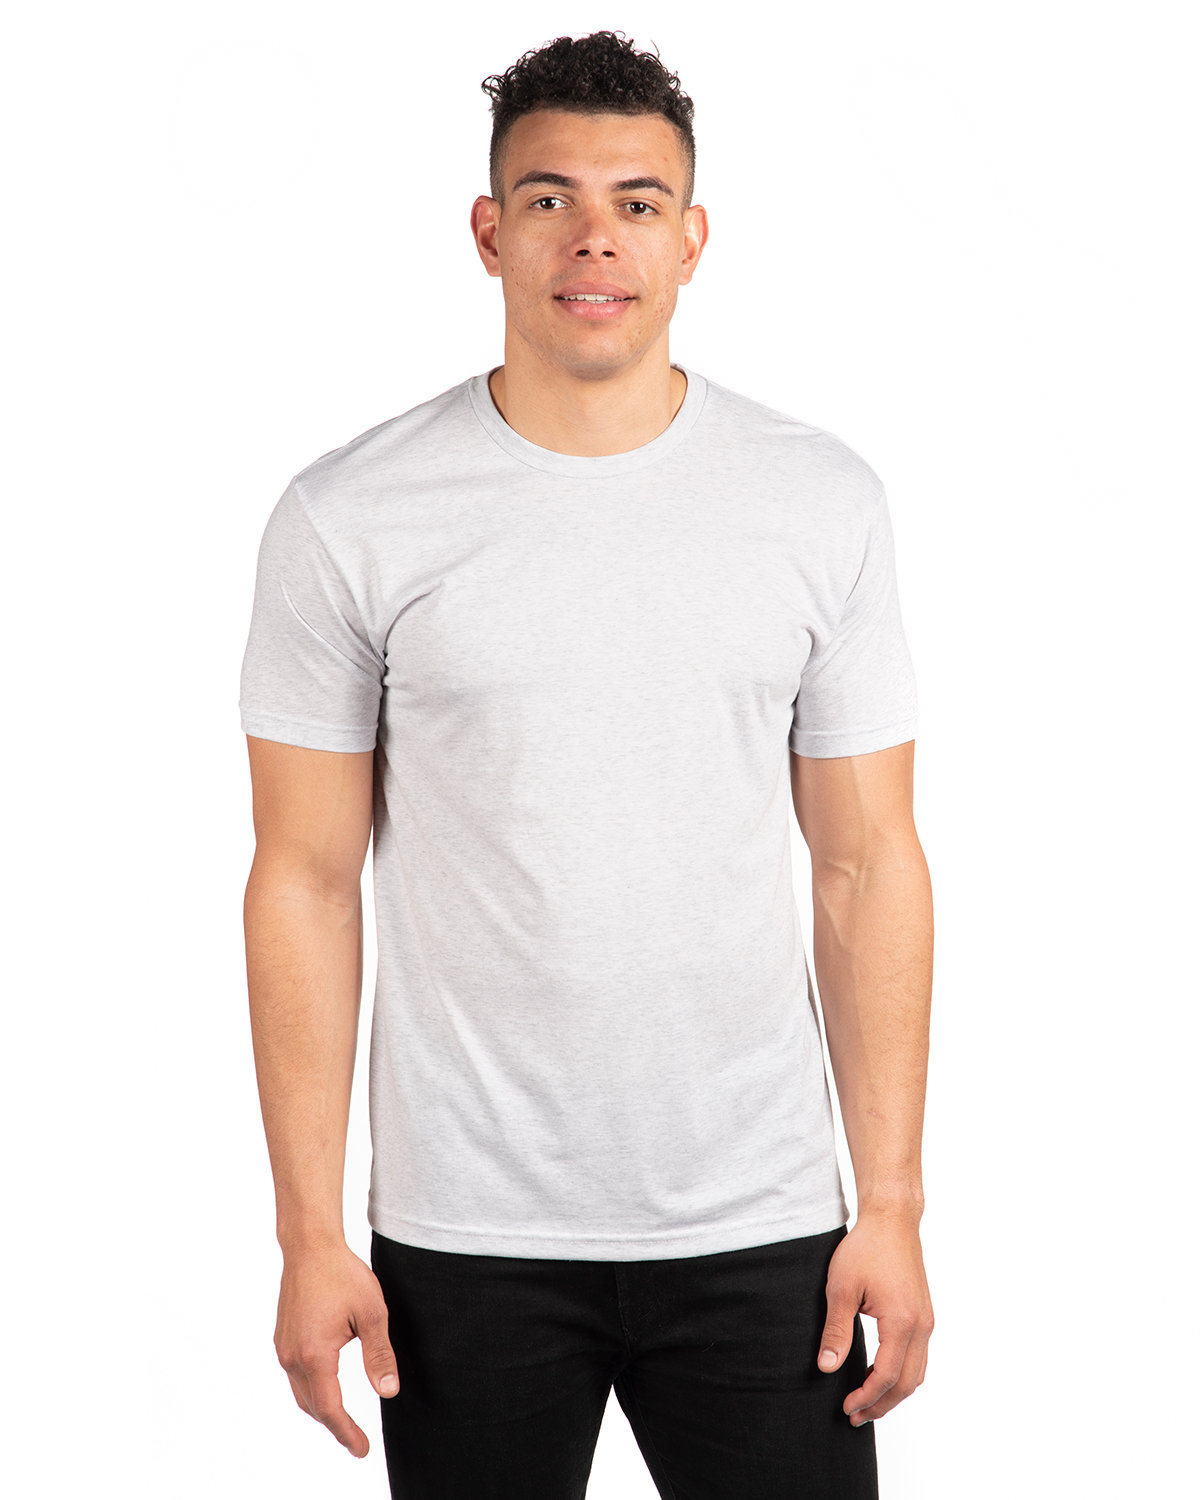 Next Level Unisex Triblend T-Shirt HEATHER WHITE 